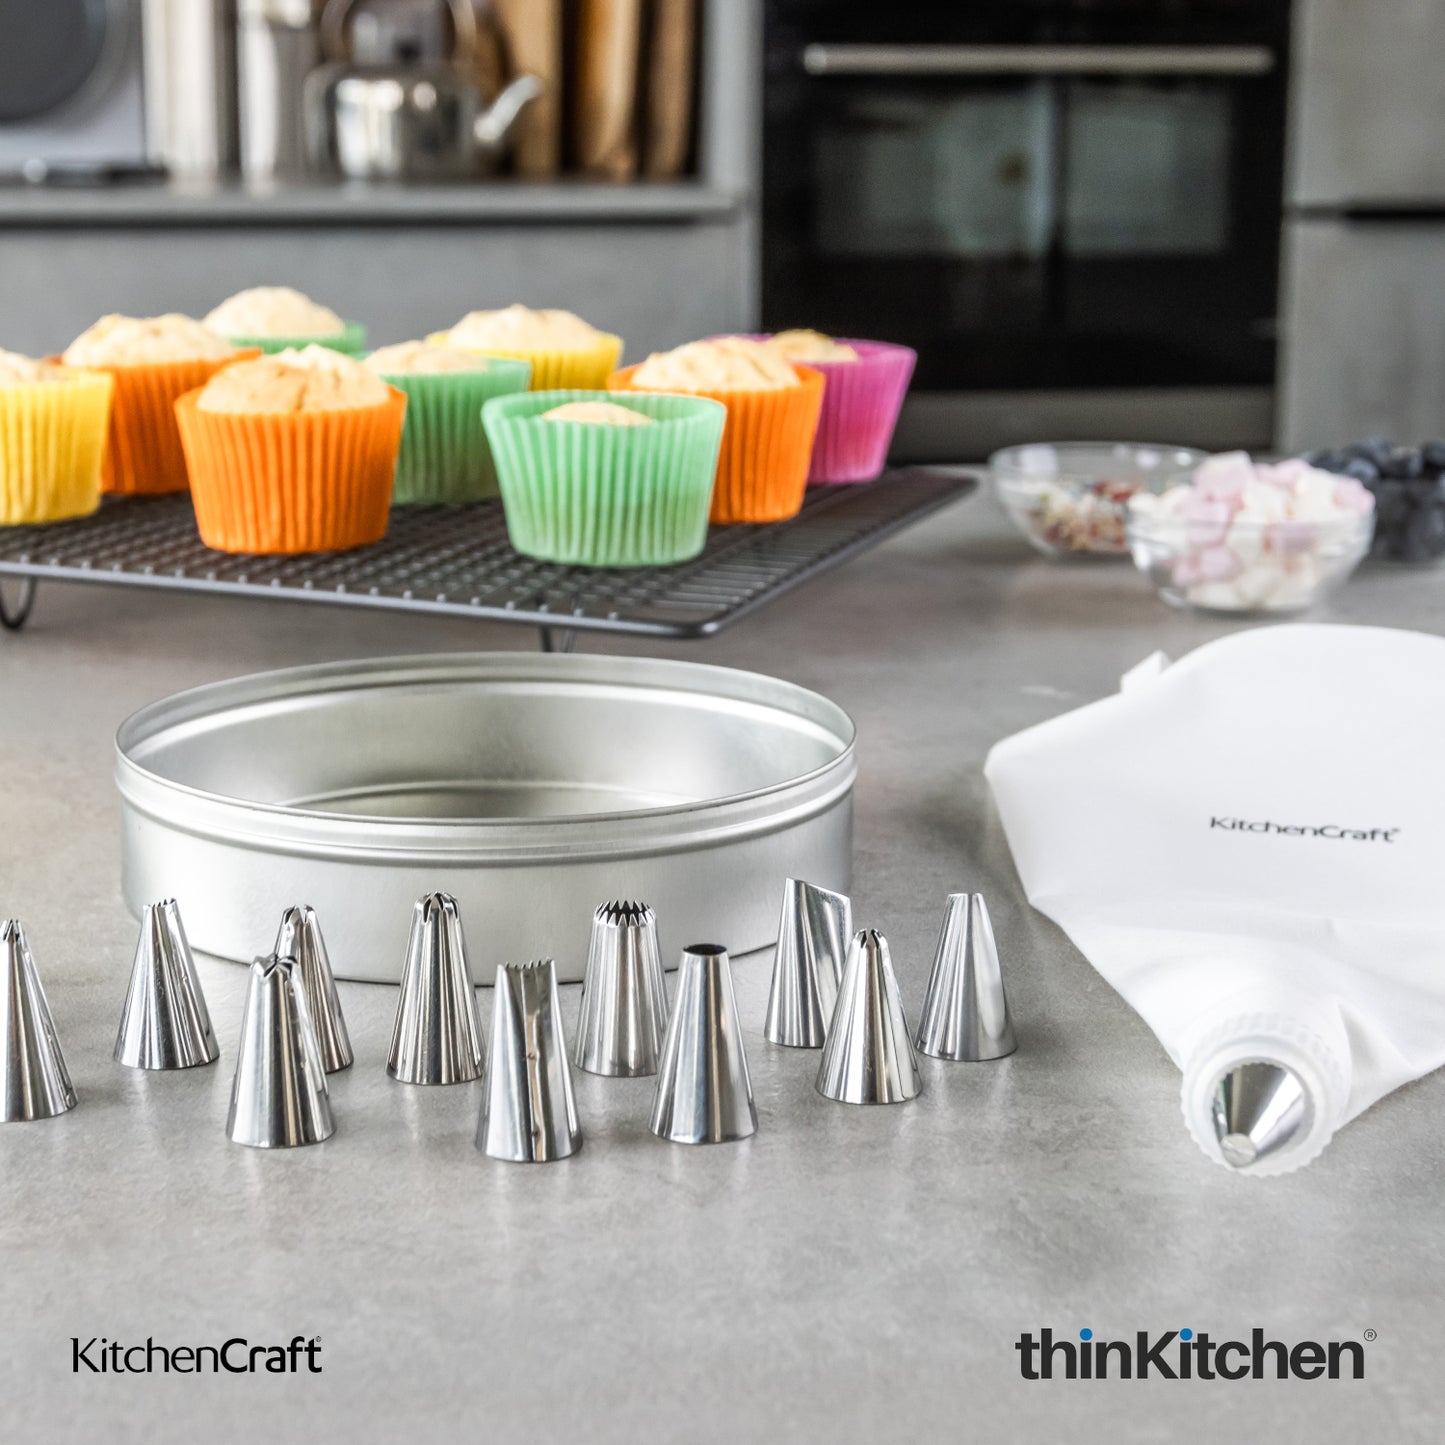 Kitchencraft 16 Pc Sweetly Does It Icing Tin Set